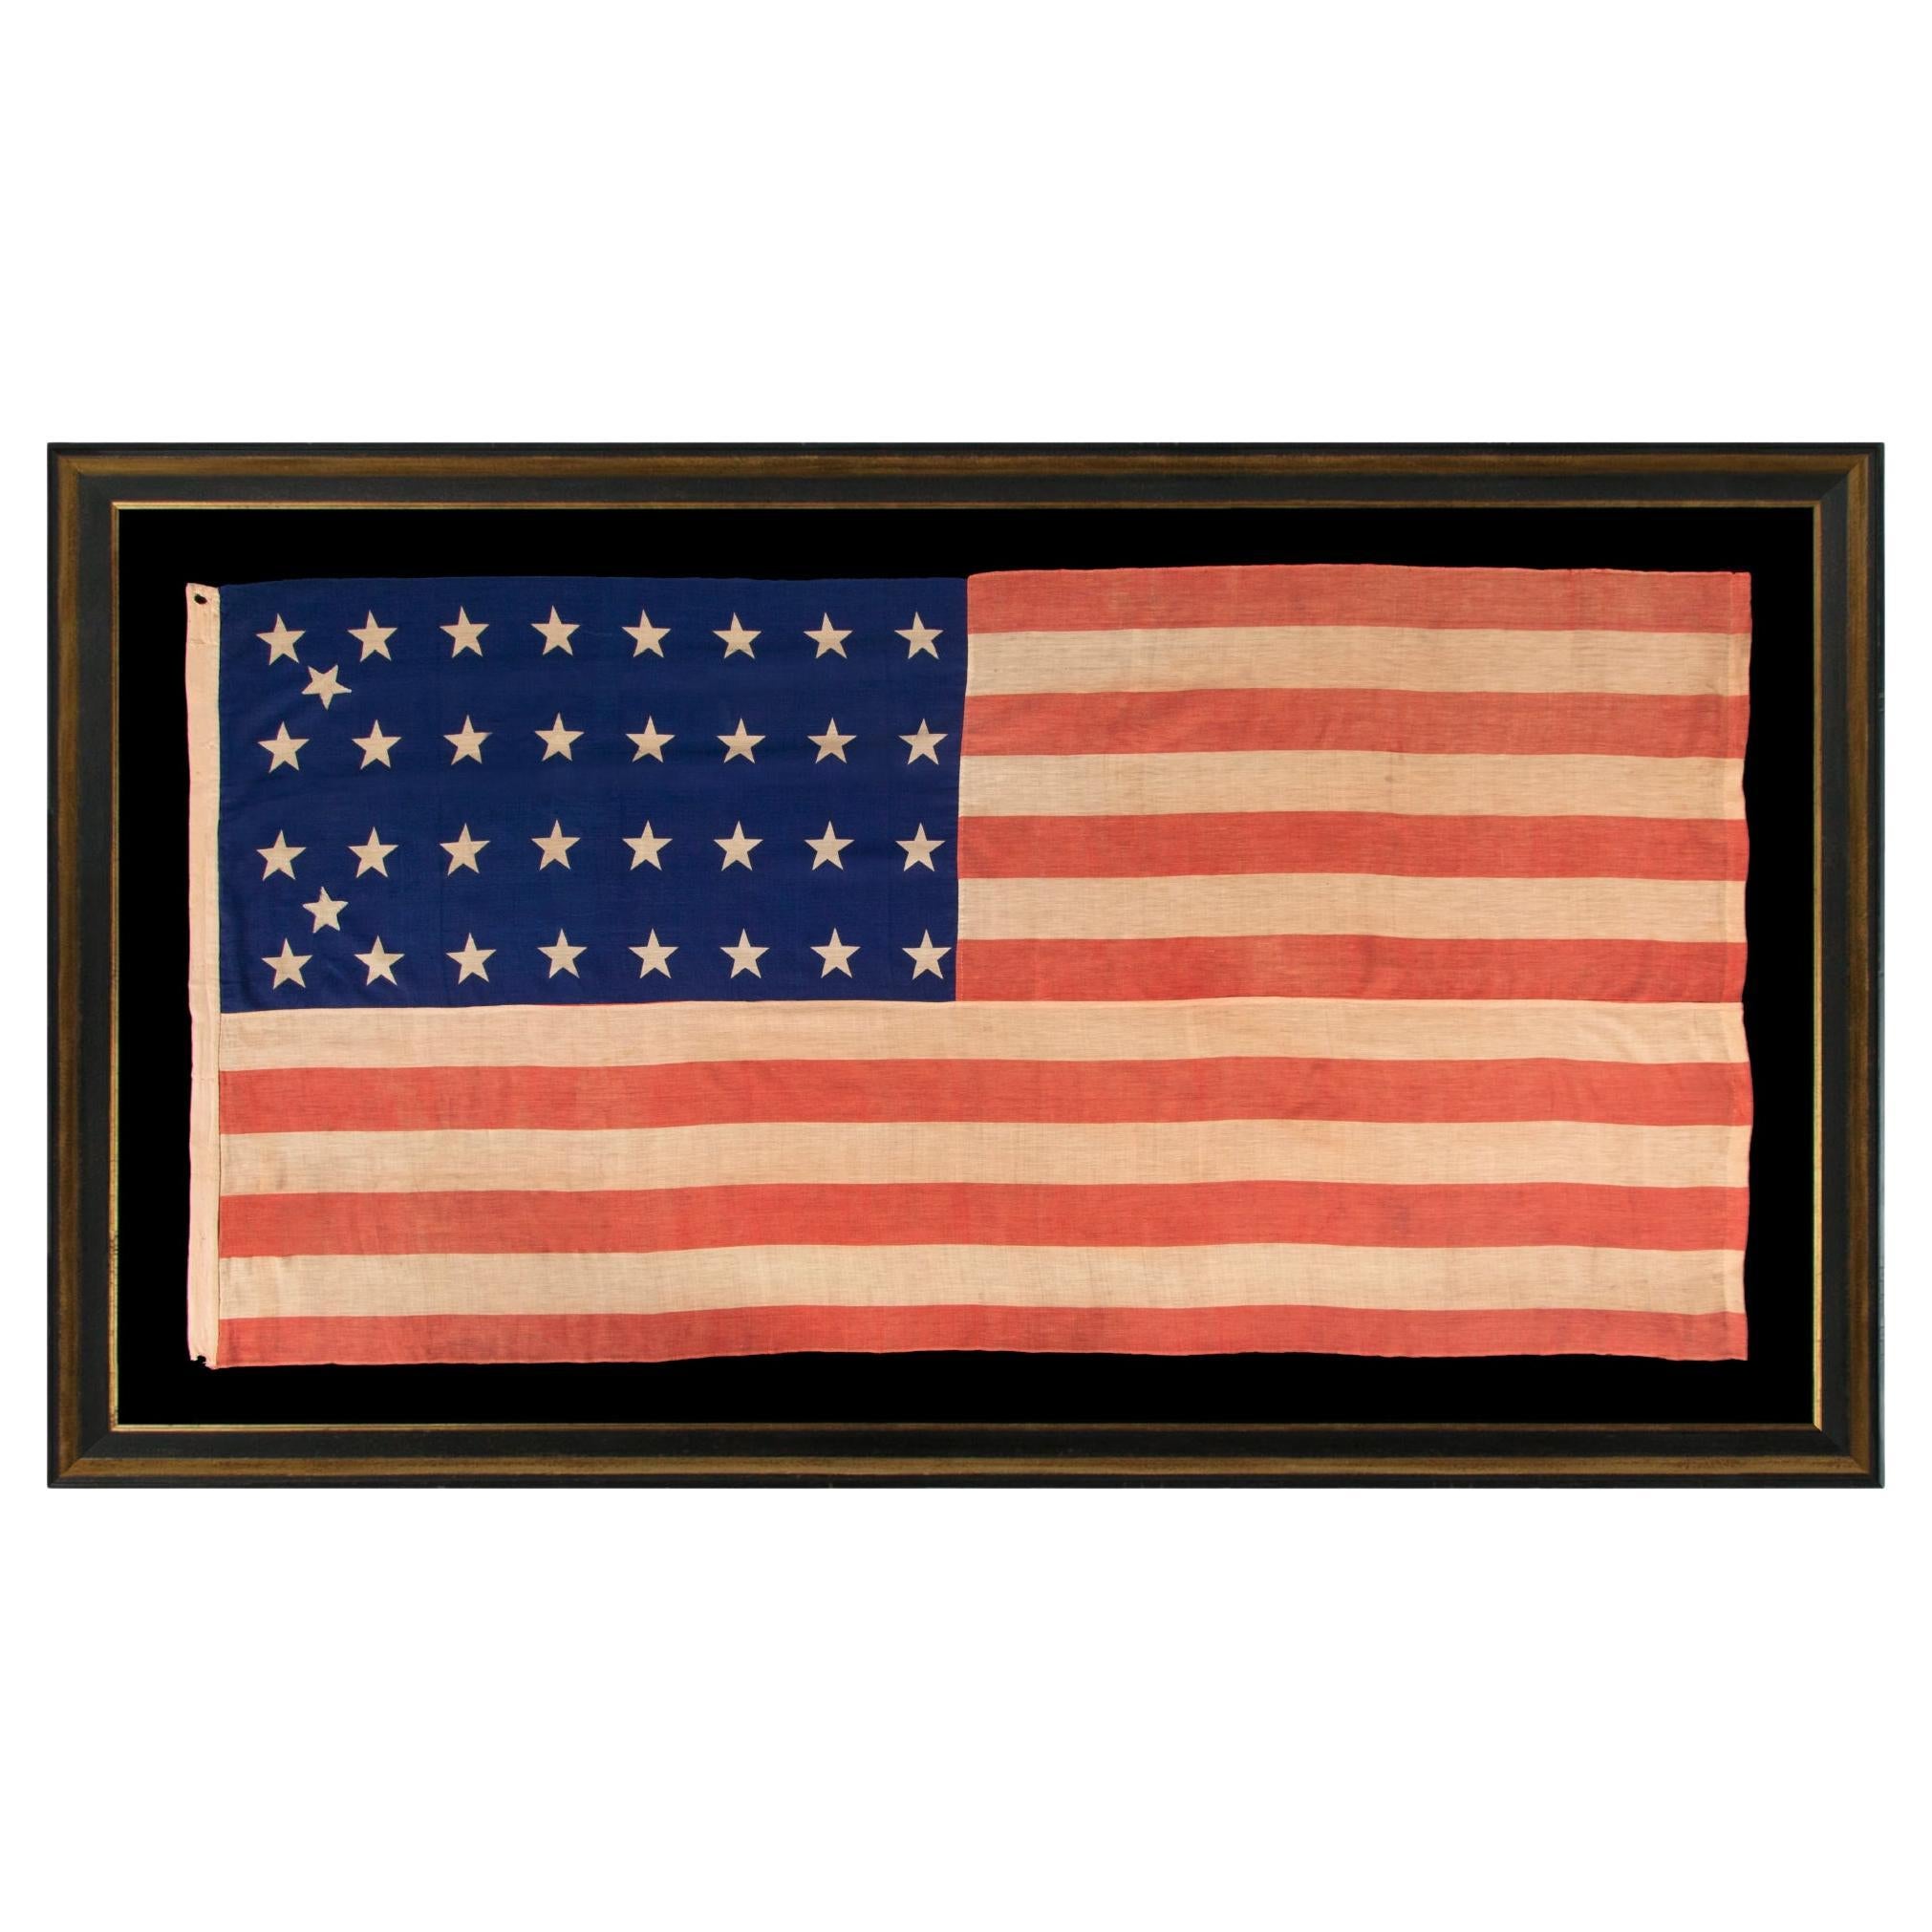 34 Star Antique American flag, Kansas Statehood, Civil War Period, ca 1861-1863 For Sale